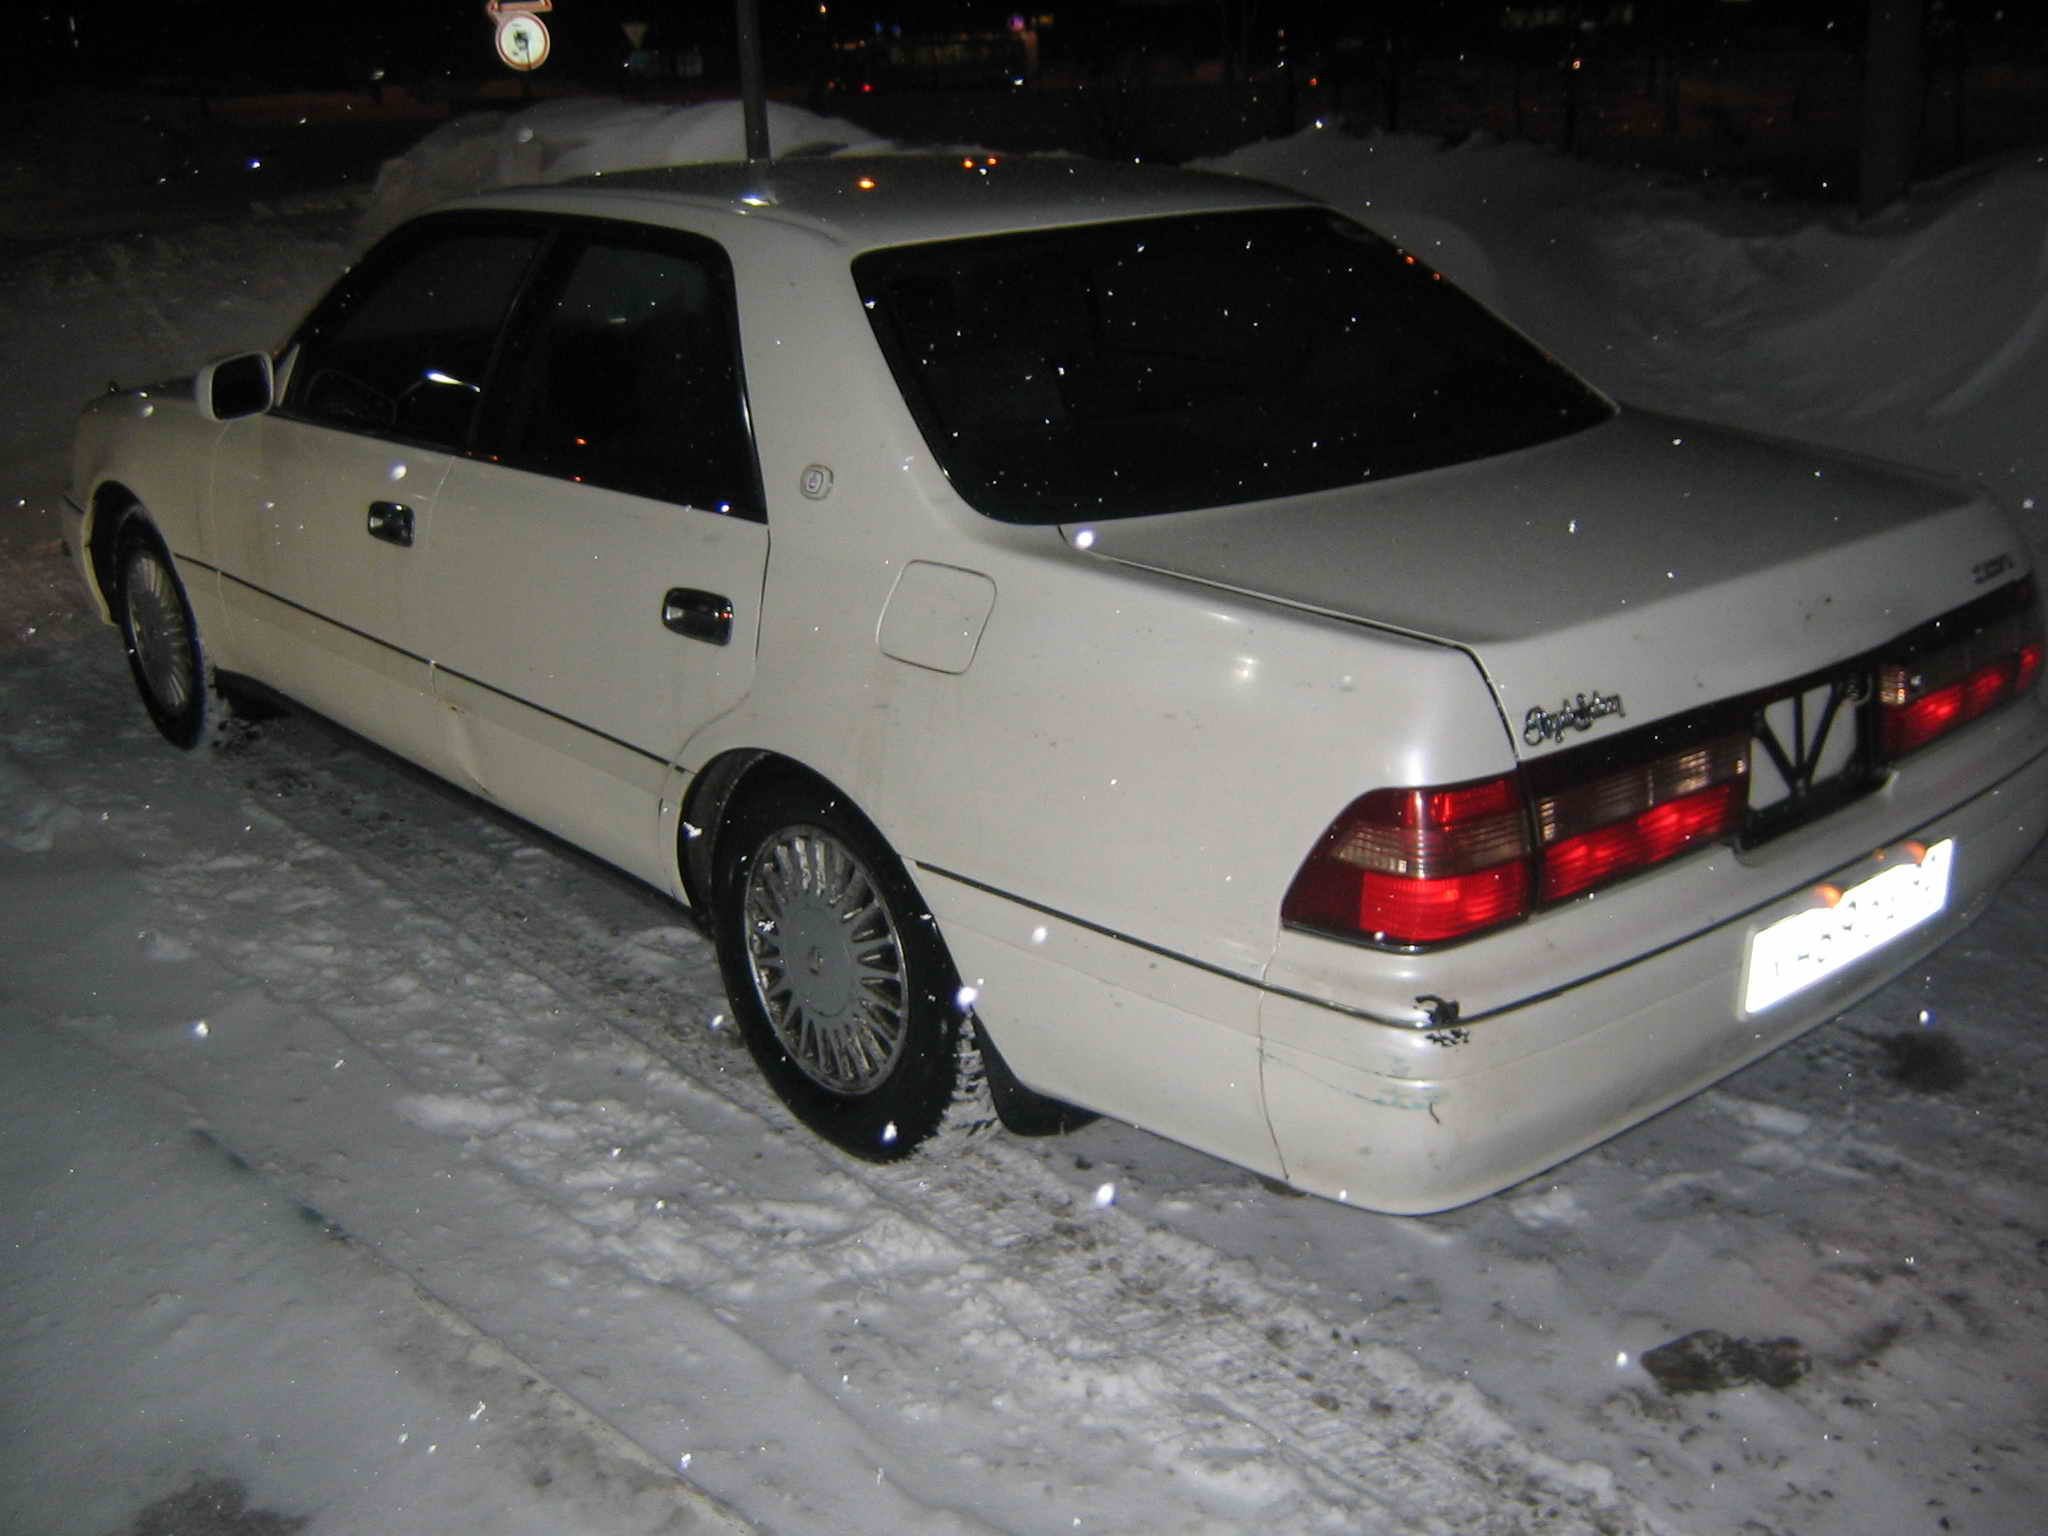 1996 Toyota Crown